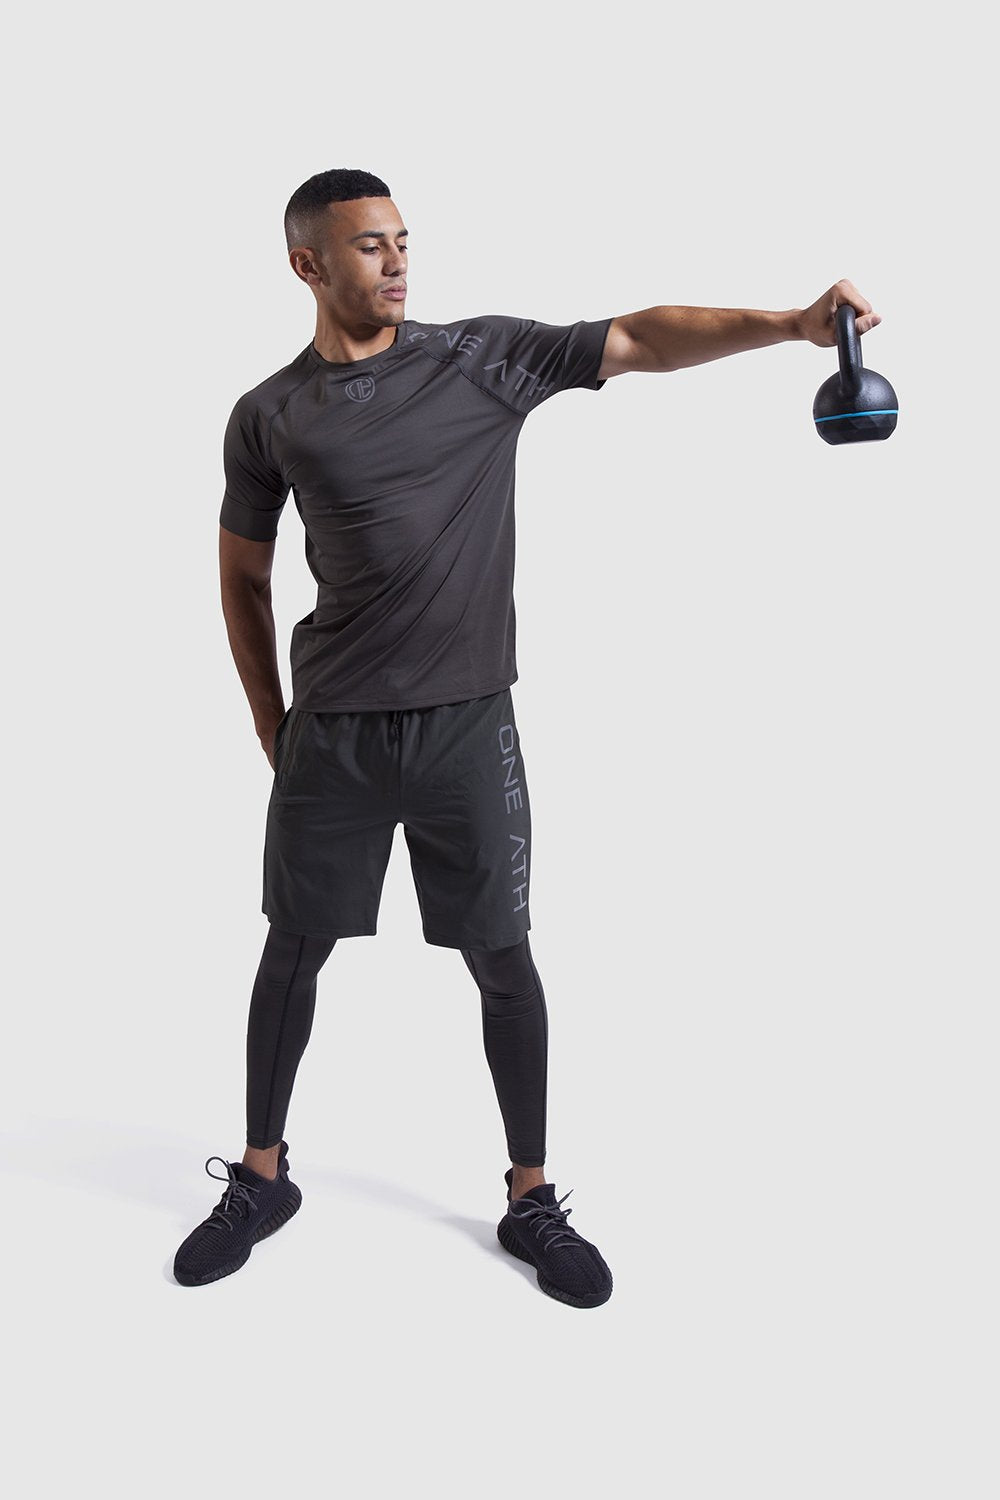 Man lifting weights in One Athletic Gymwear